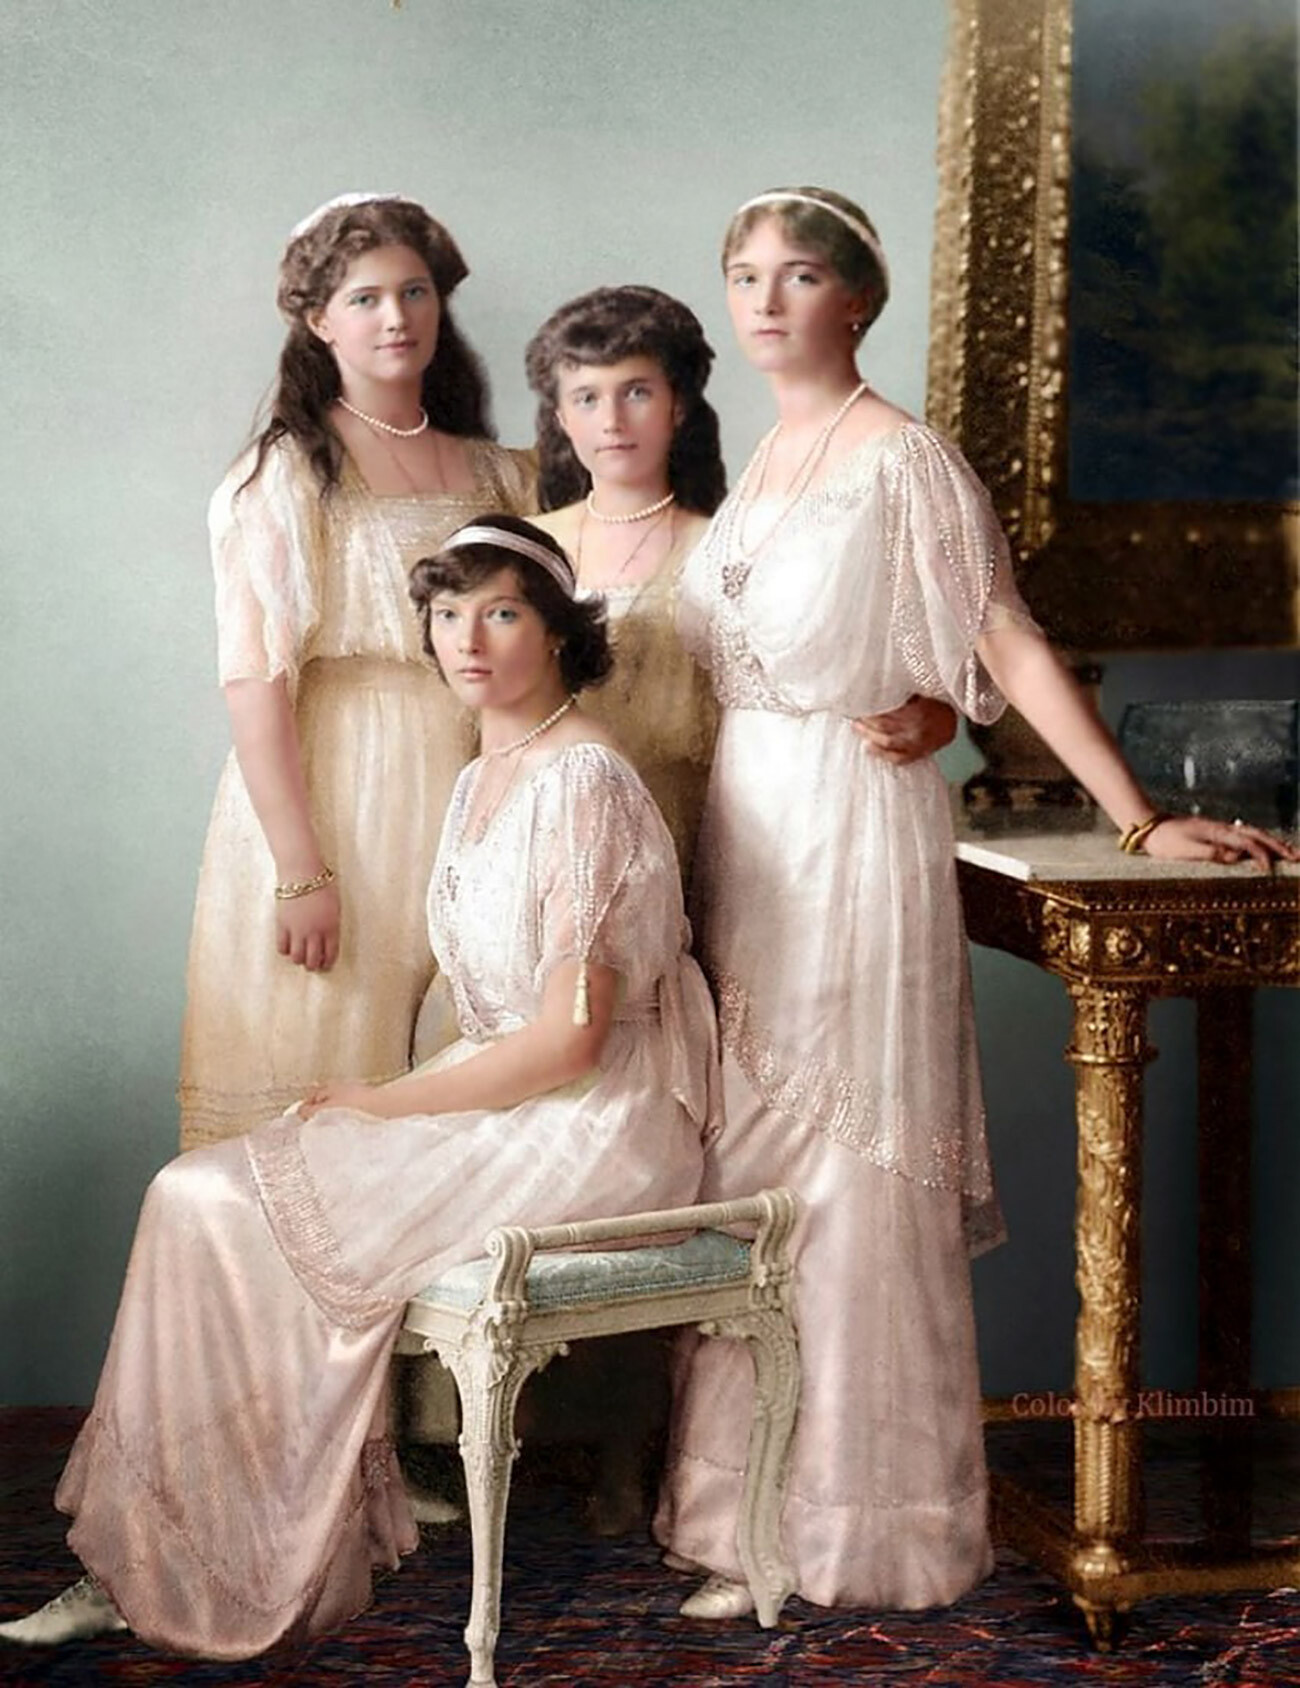 In piedi: Marija, Anastasija, Olga; a sedere: Tatjana

